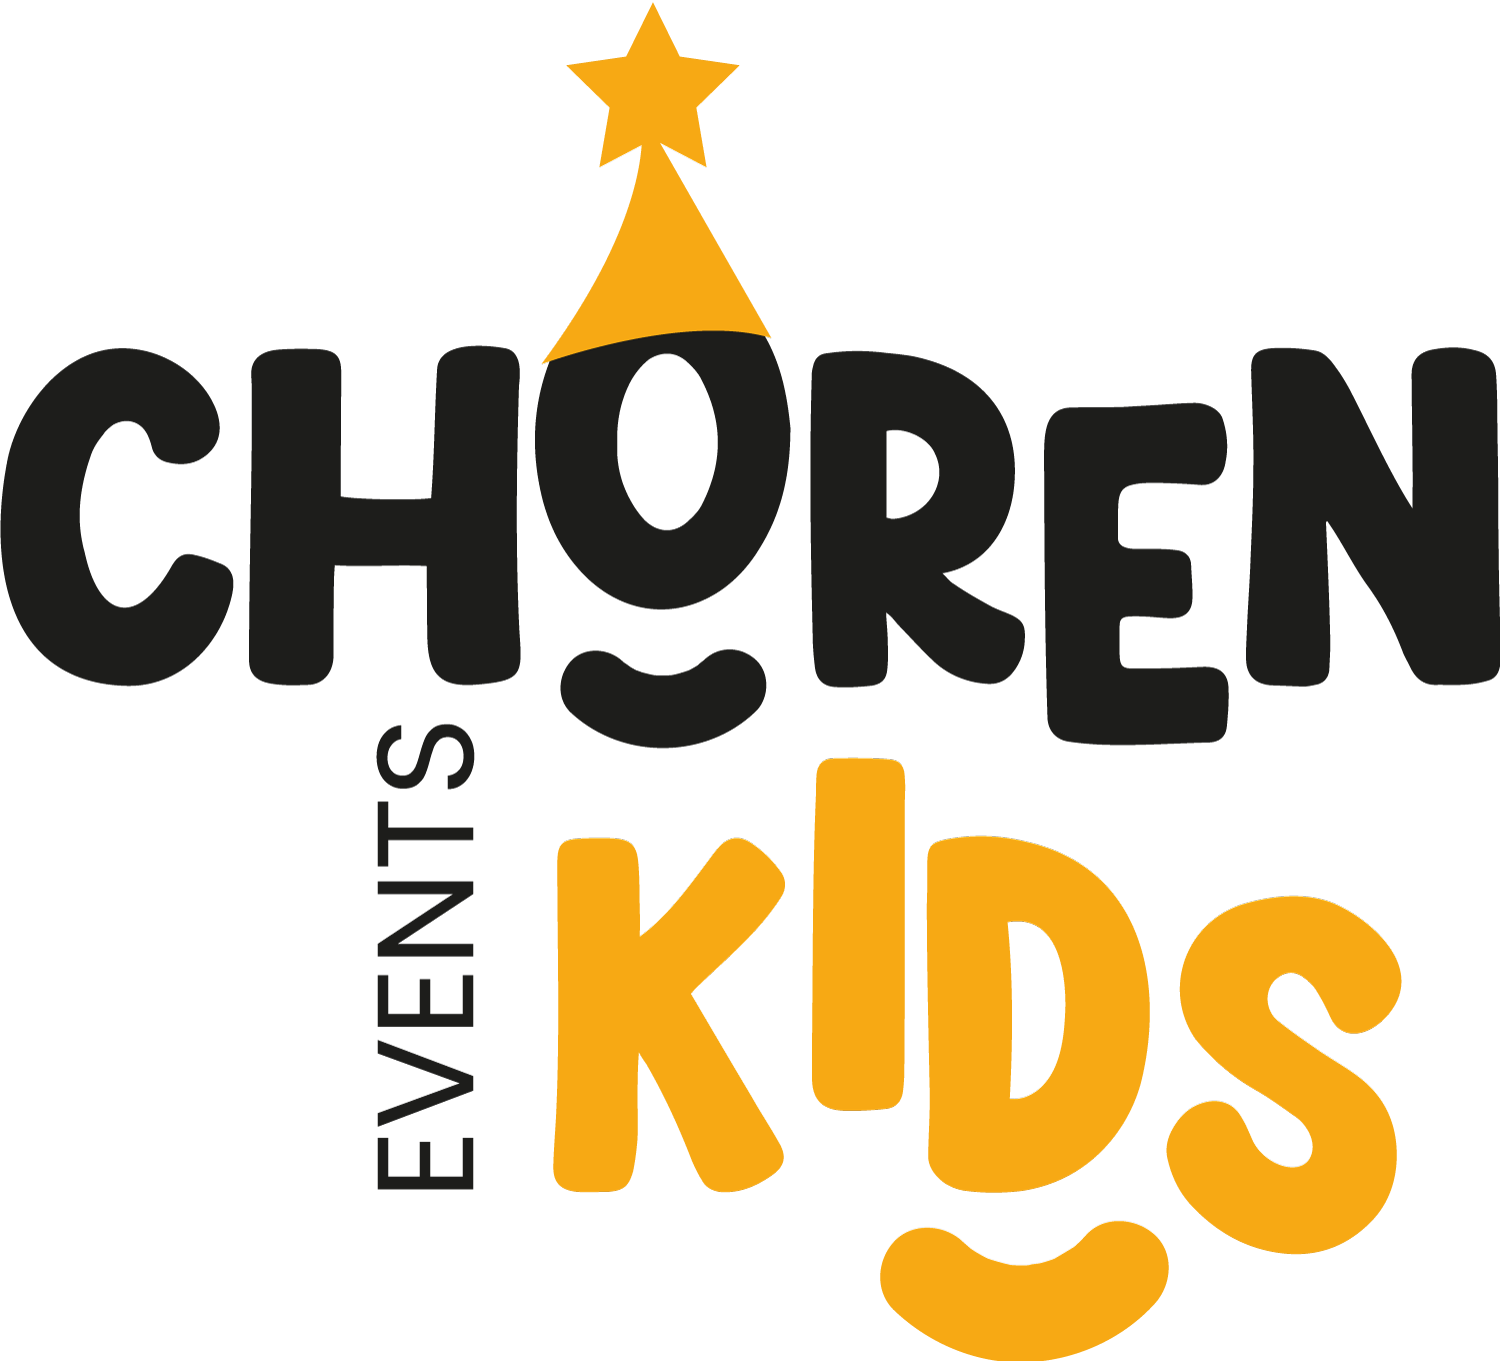 Choren Kids Events